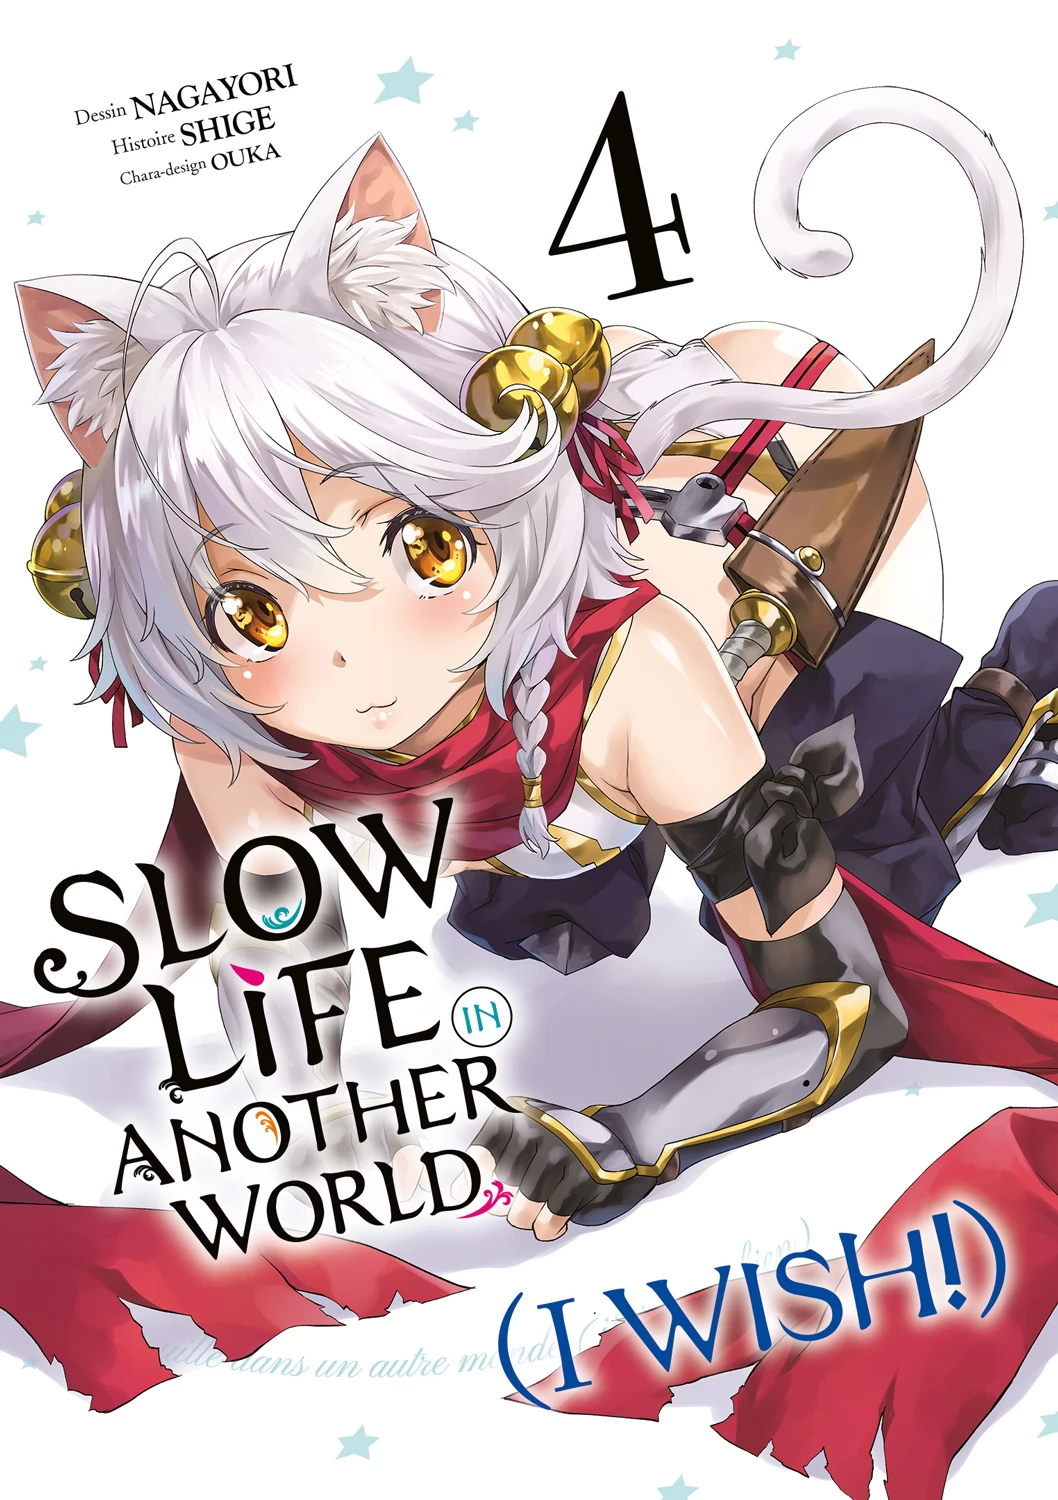 Slow Life In Another World (I Wish!) - Tome 4 - Livre (Manga) - Meian -  Nagayori, Nagayori - Livre (manga)